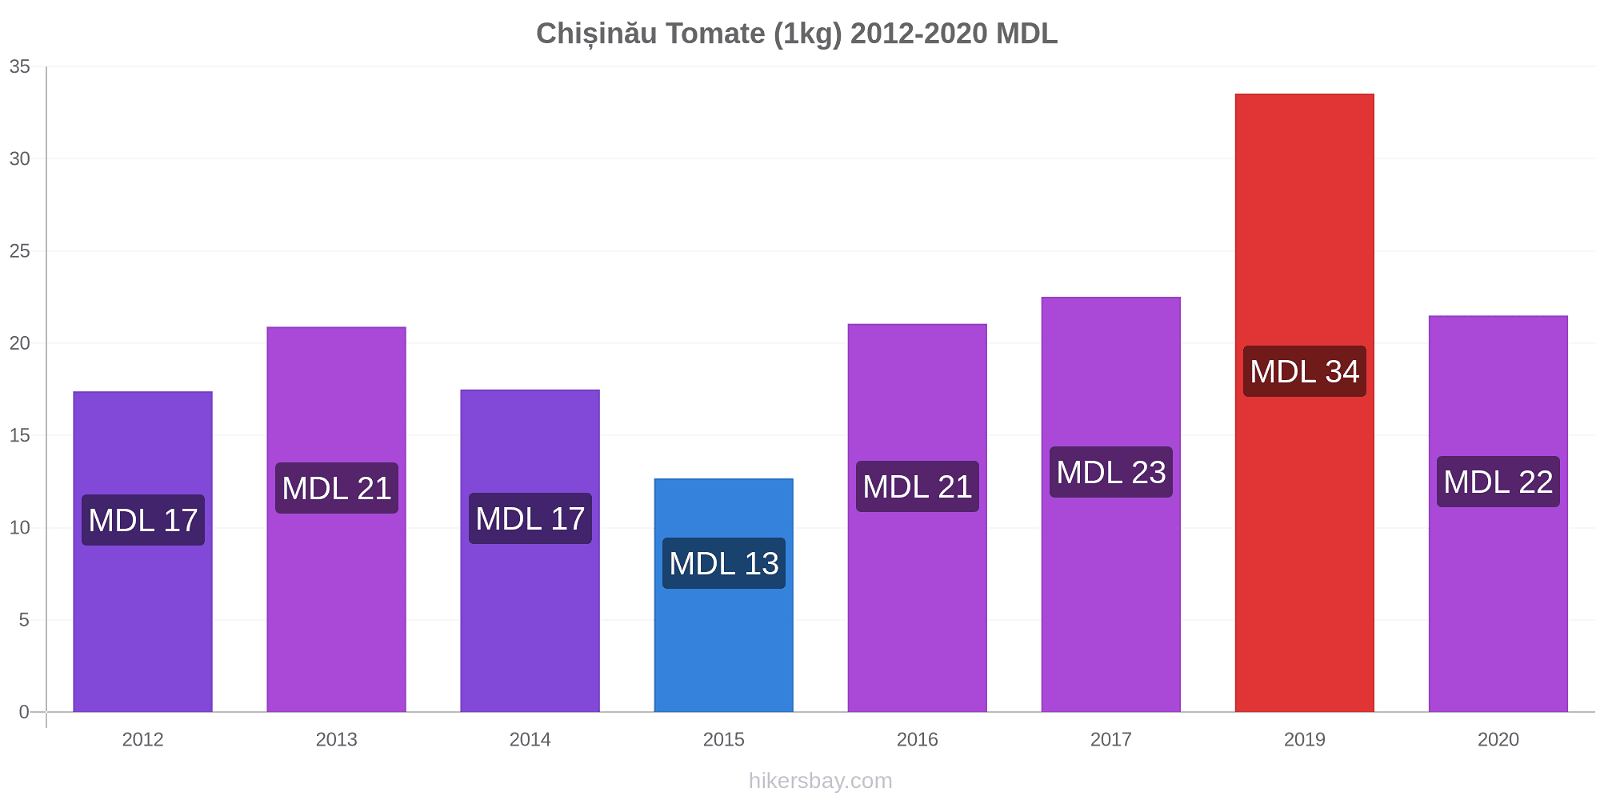 Chișinău changements de prix Tomate (1kg) hikersbay.com